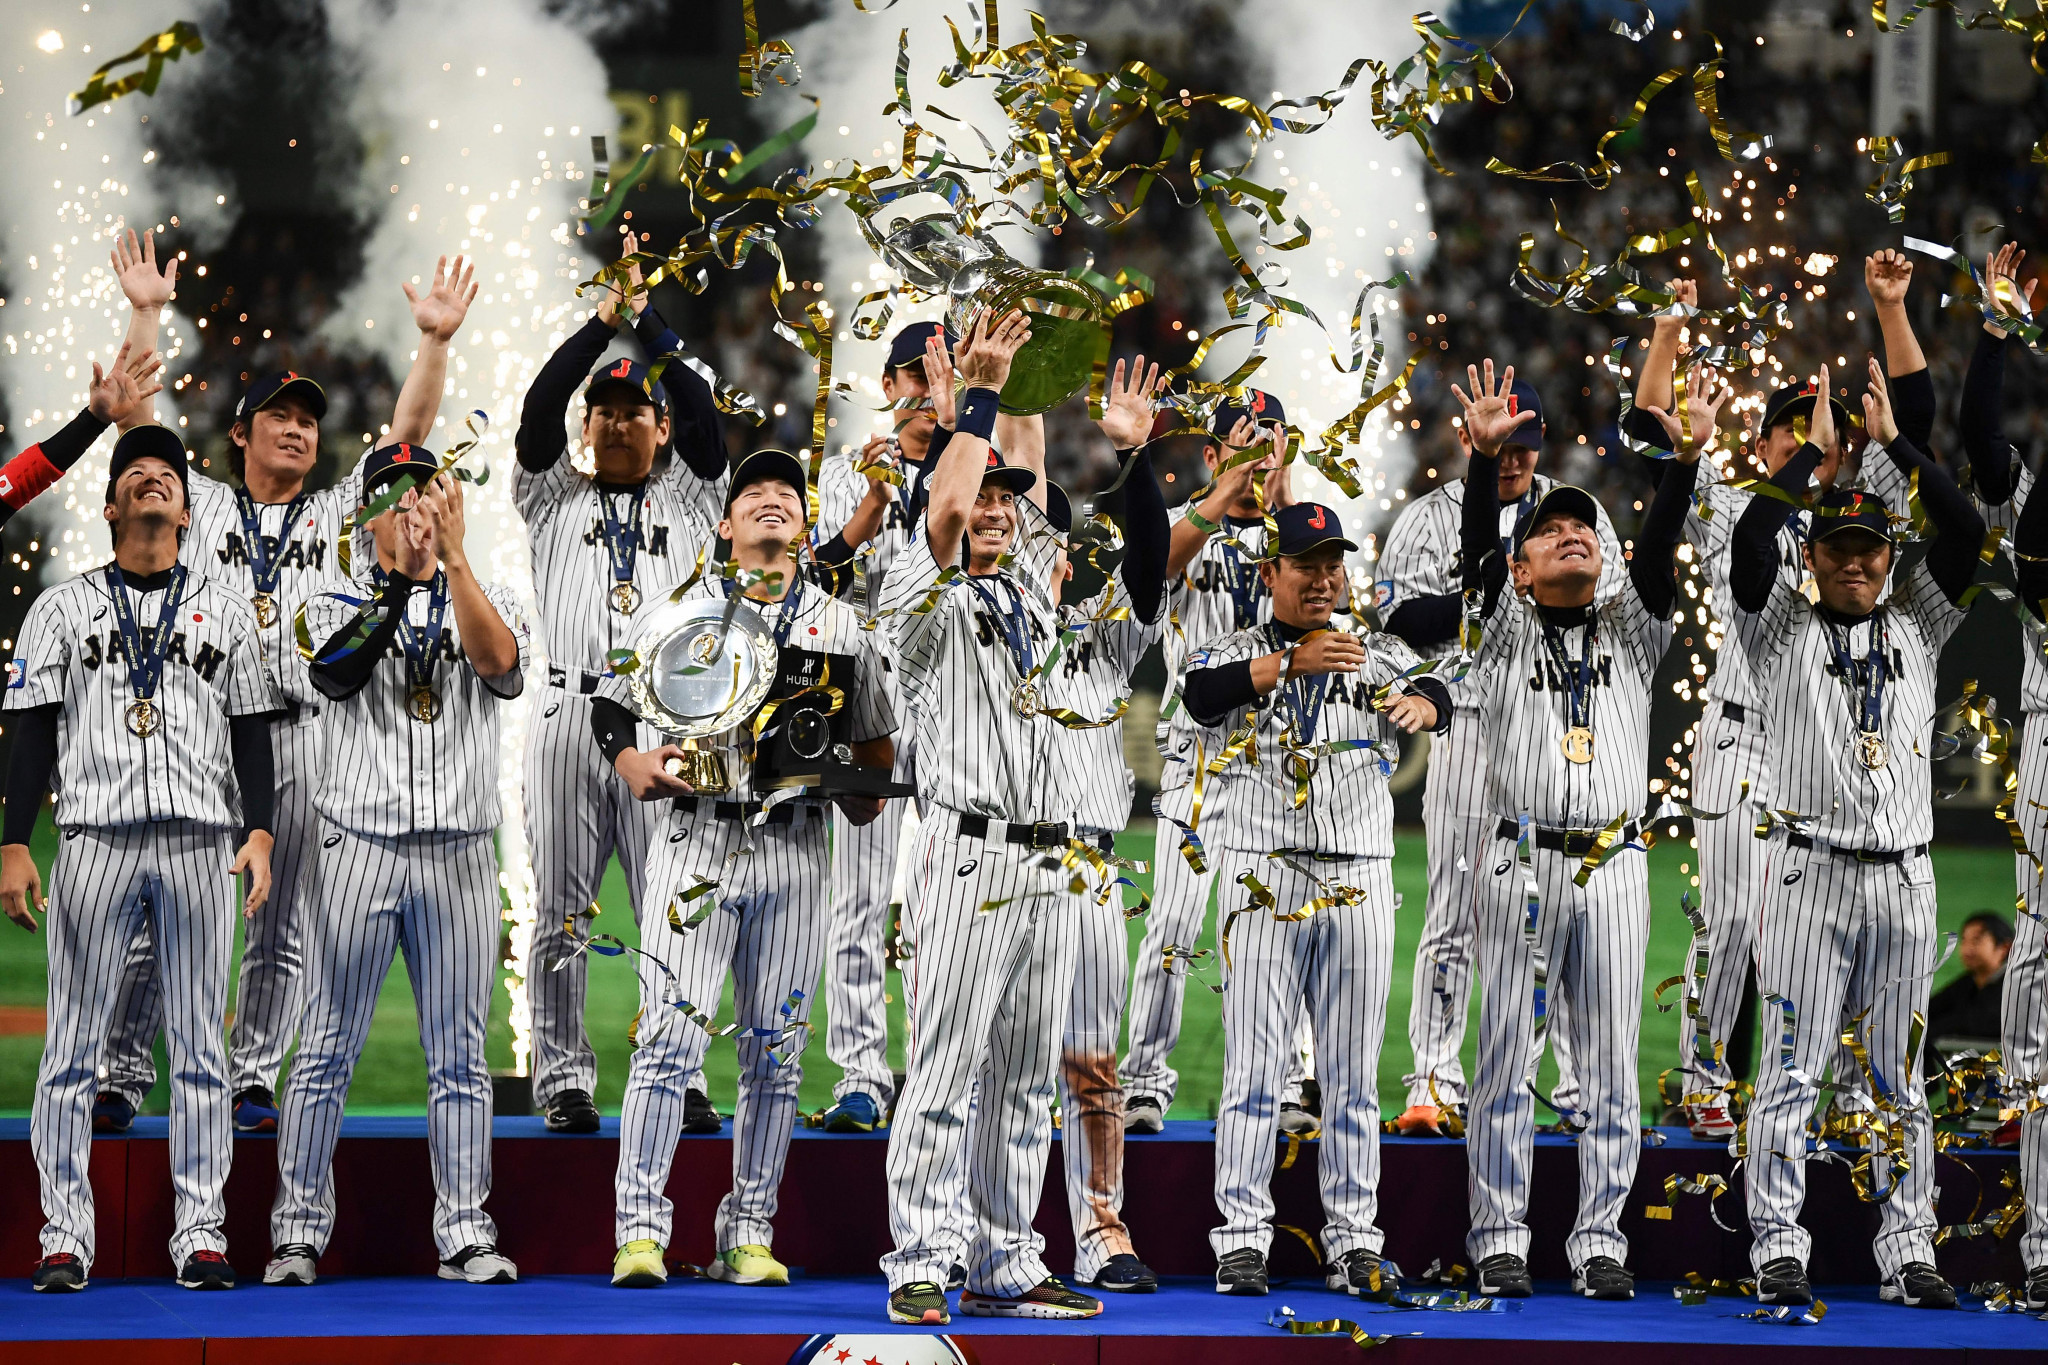 Japan tops men's and women's baseball lists in latest WBSC rankings